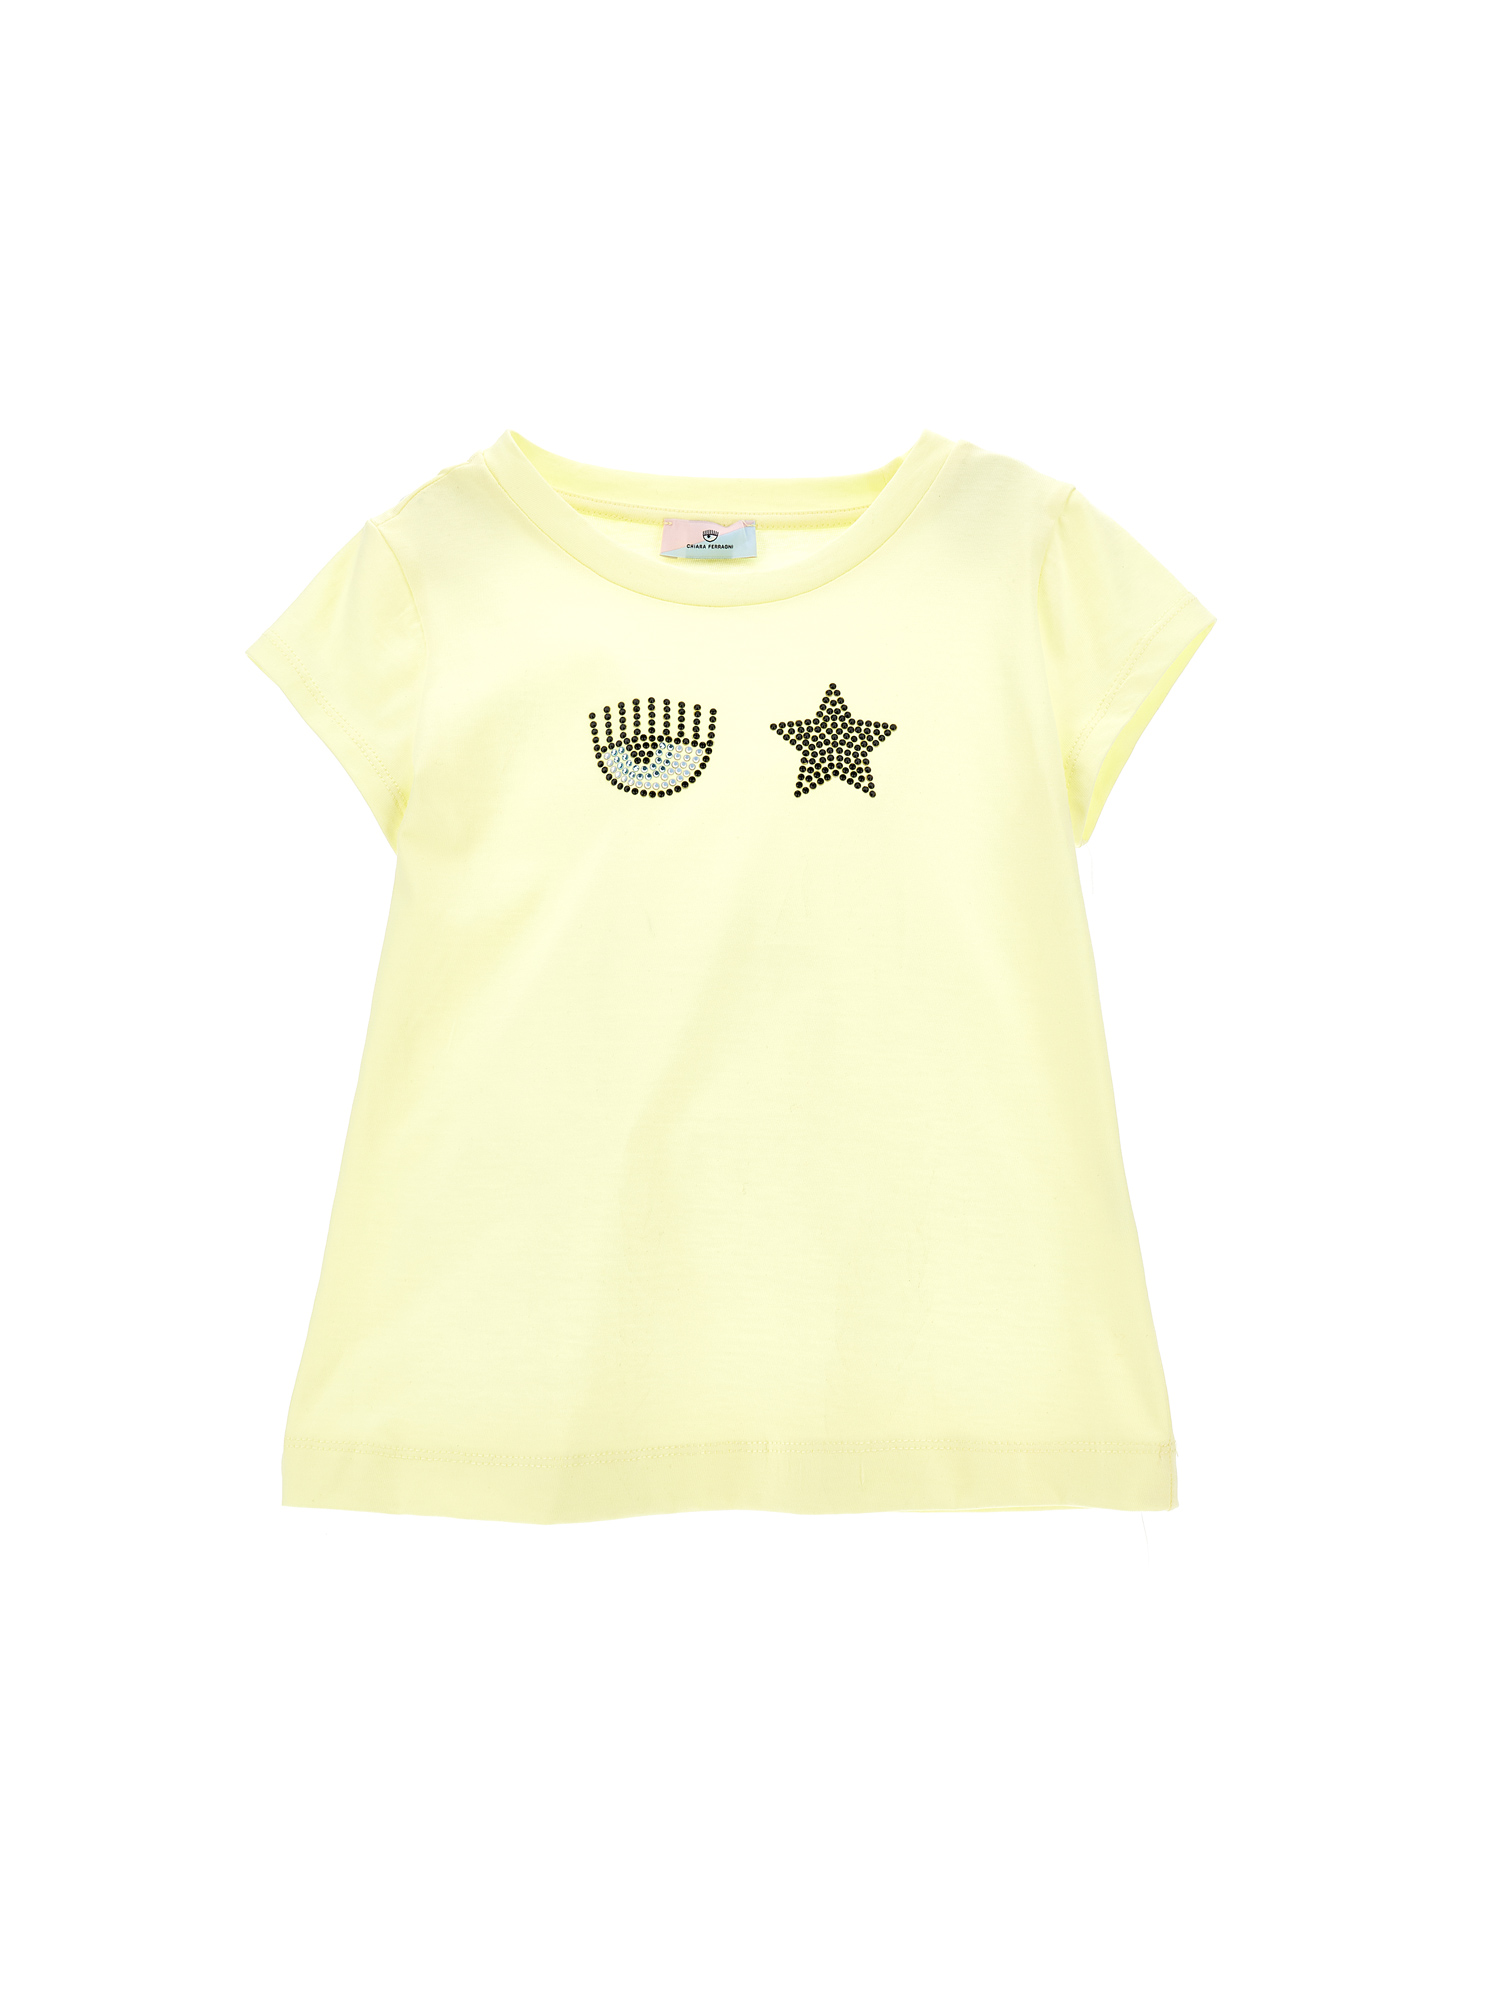 Chiara Ferragni Eyestar Embroidery T-shirt In Wax Yellow